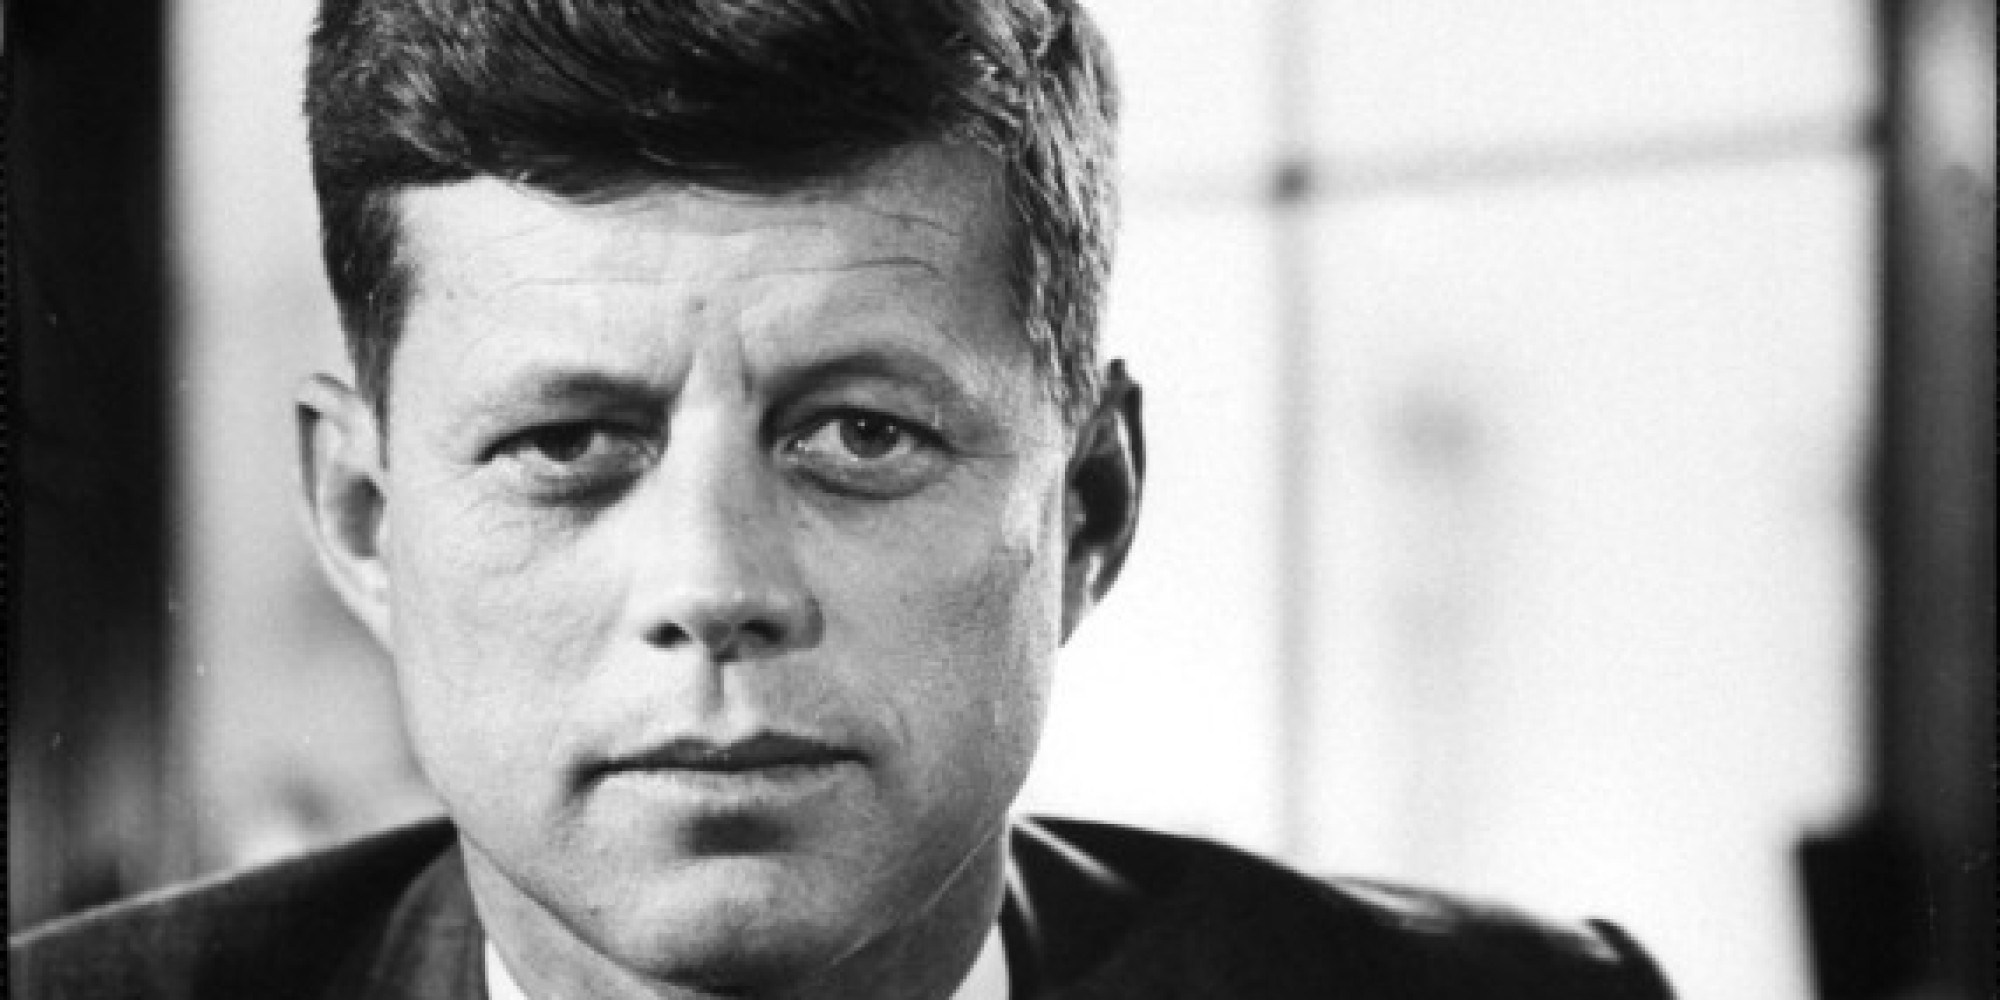 John F. Kennedy Biography